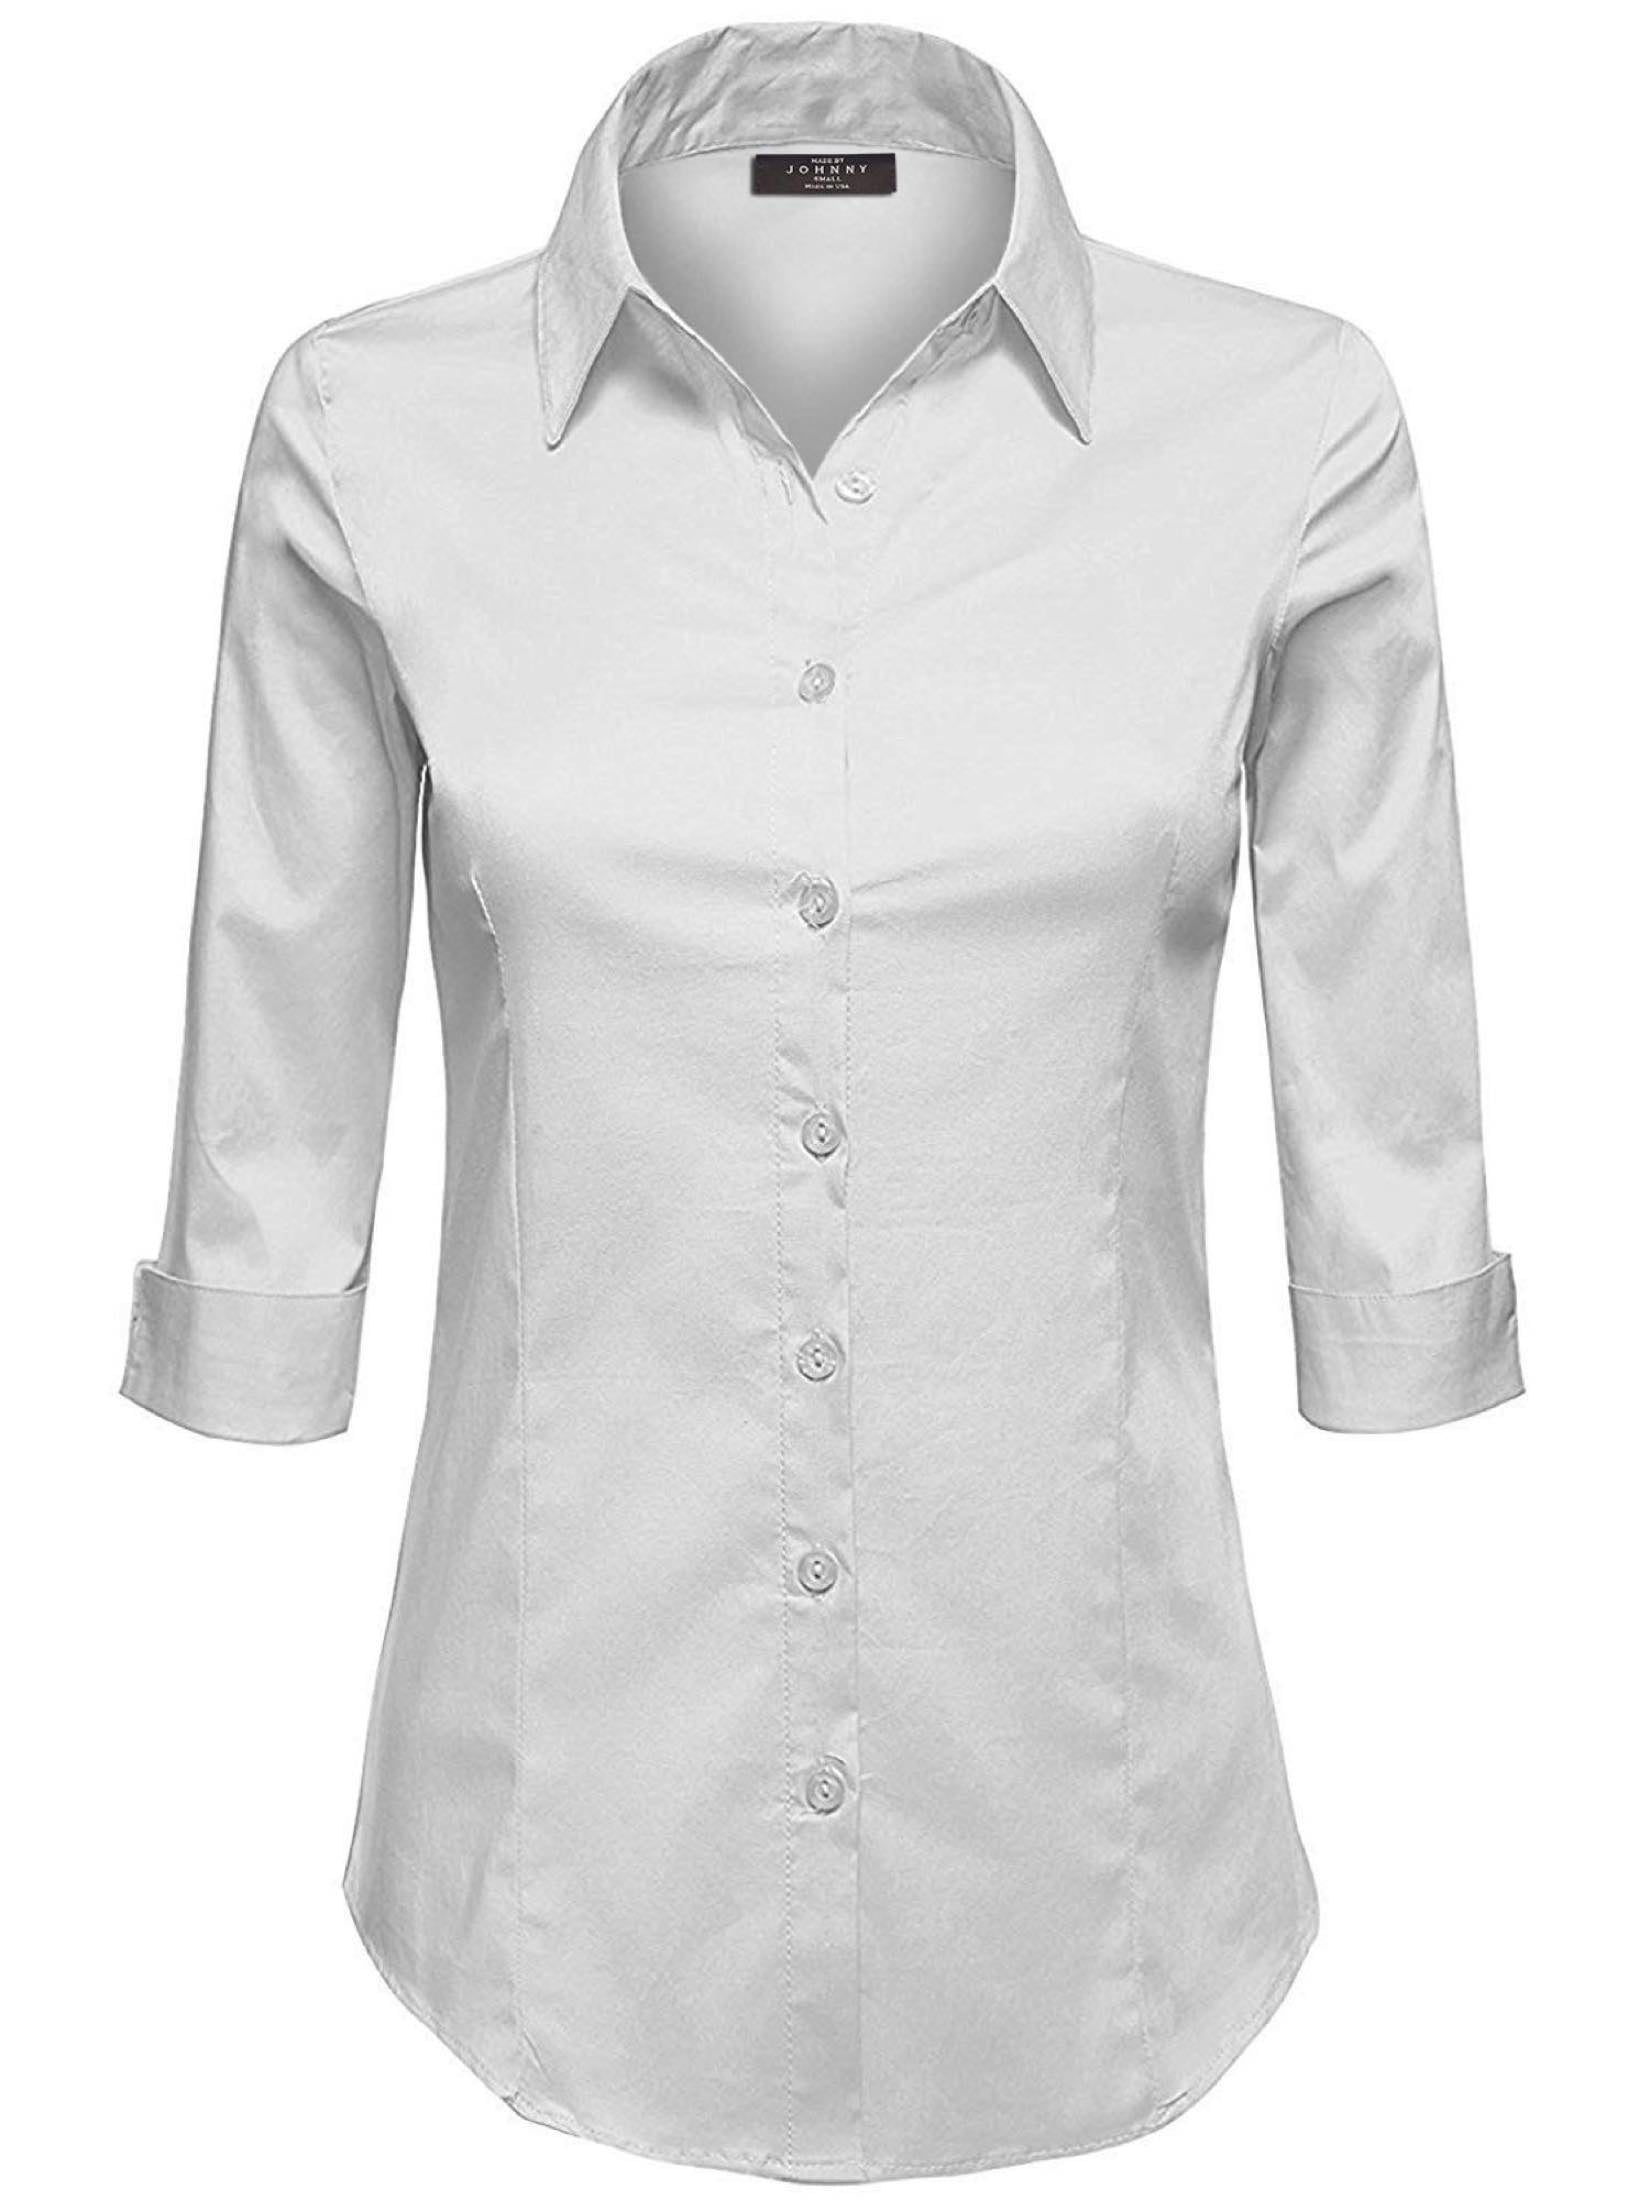 Women's White Button Down Shirts